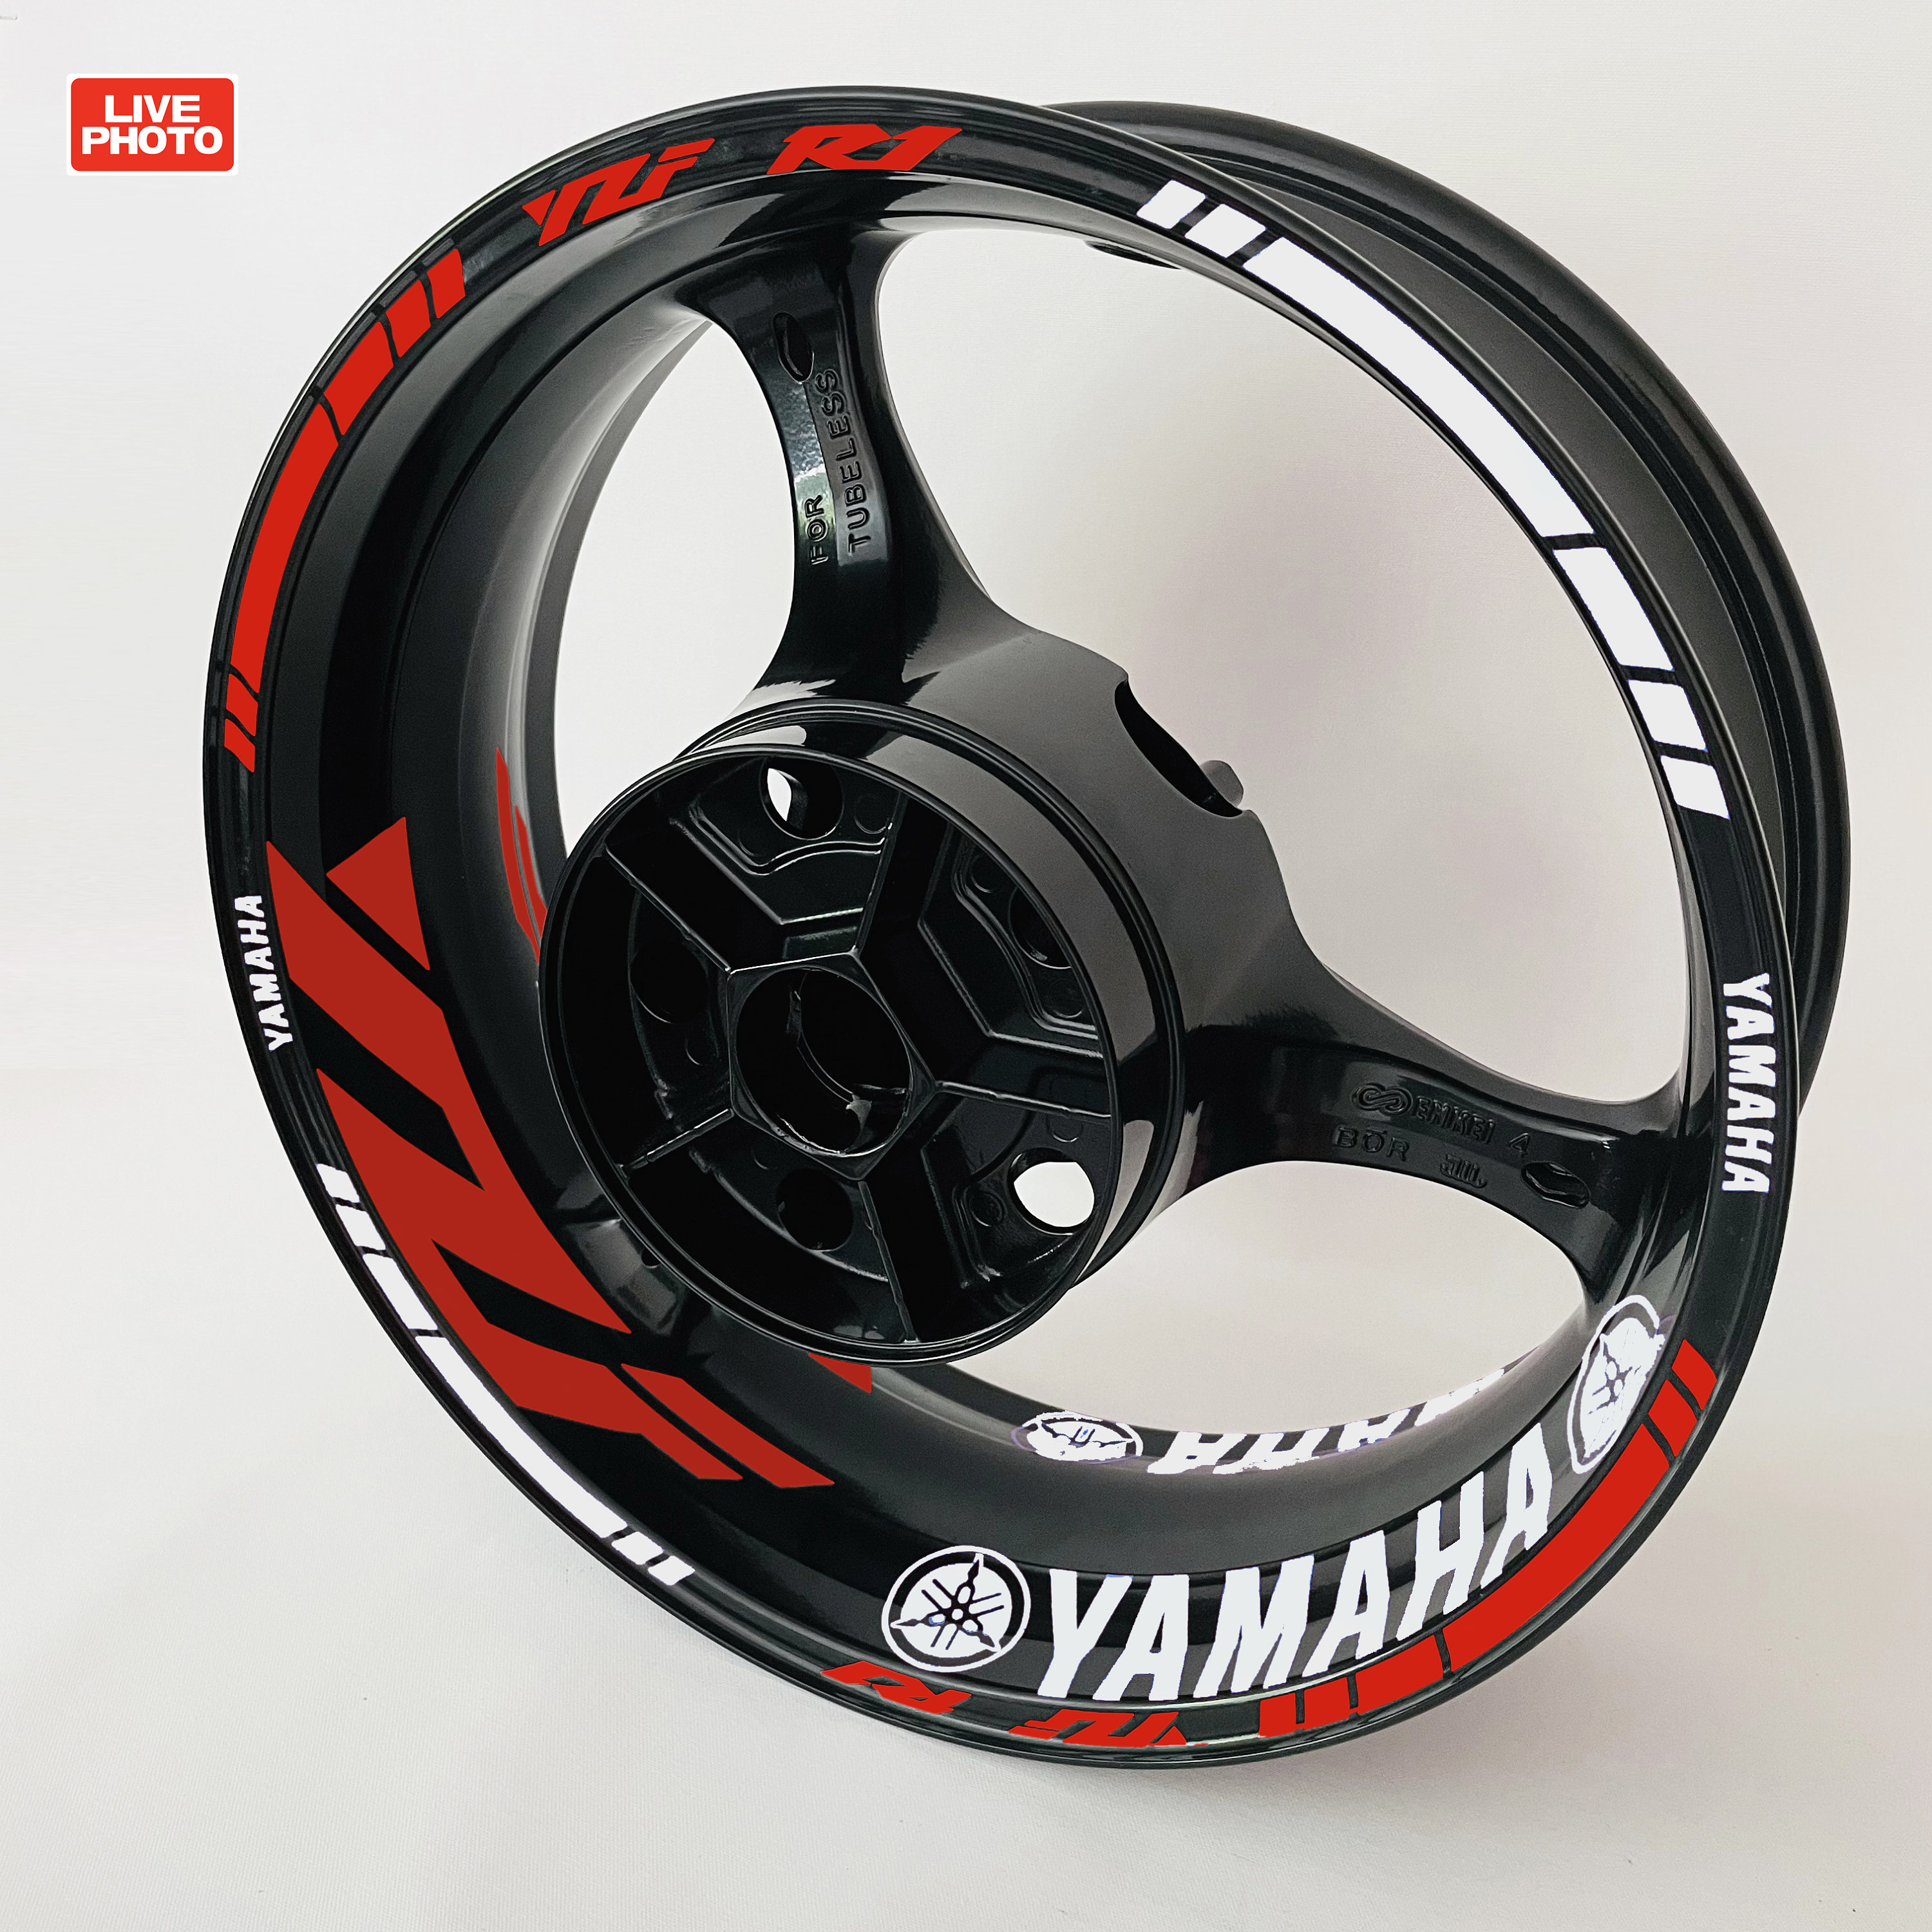 Yamaha r1 sticker - .de